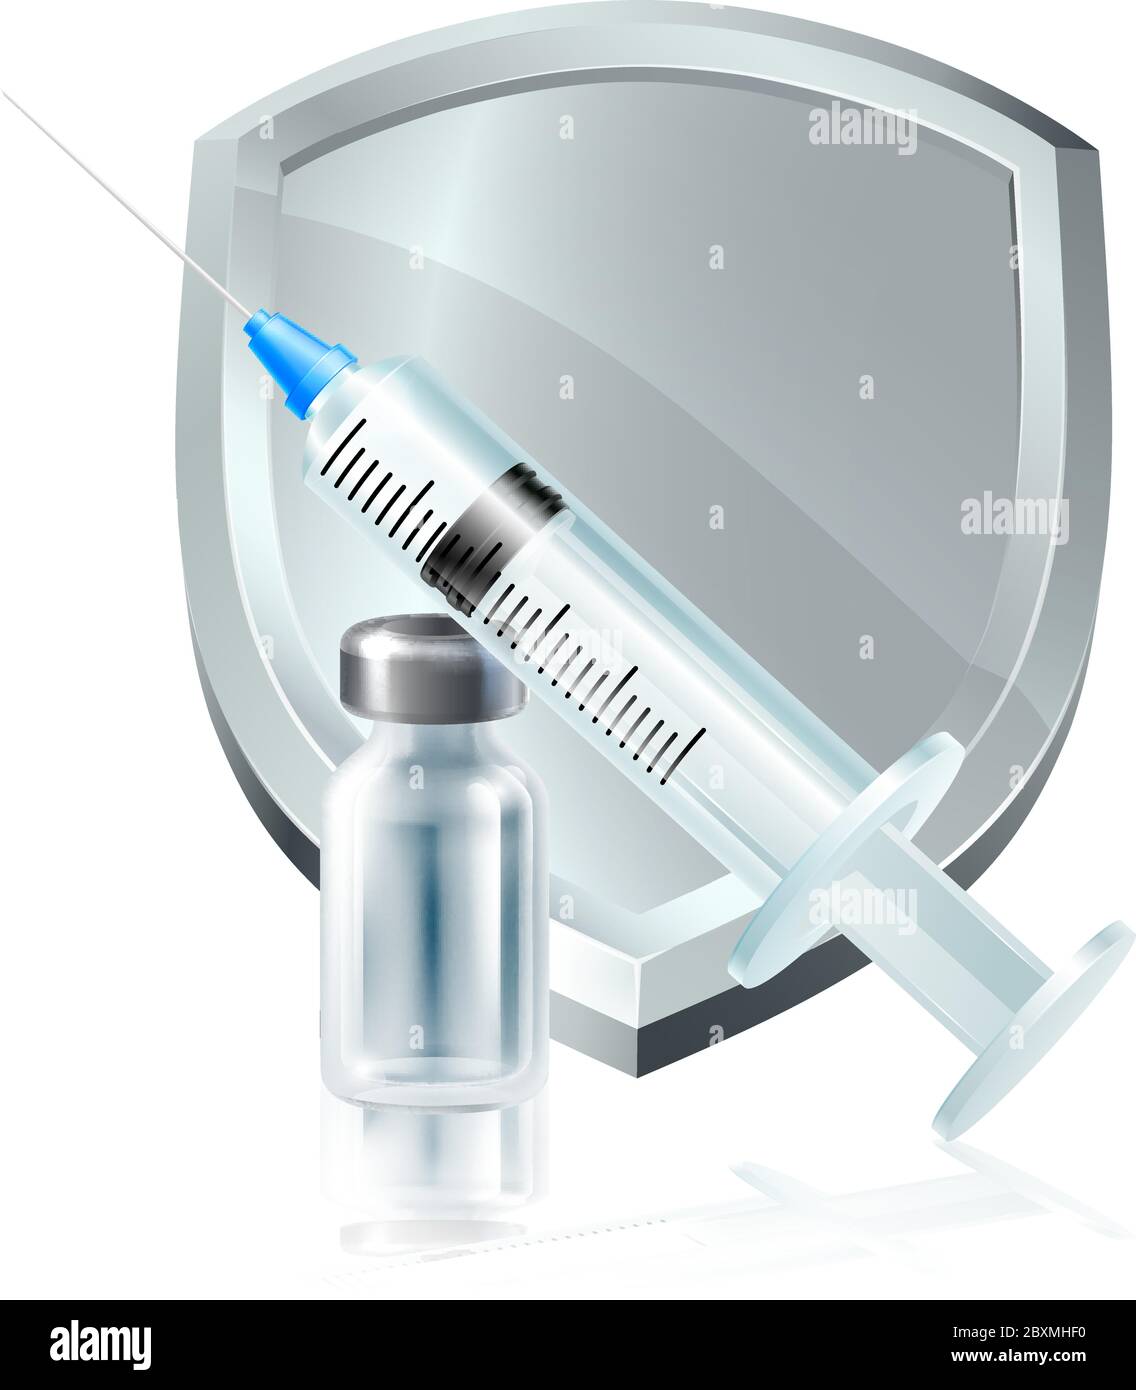 Immunization Vaccination Syringe Injection Shield Stock Vector